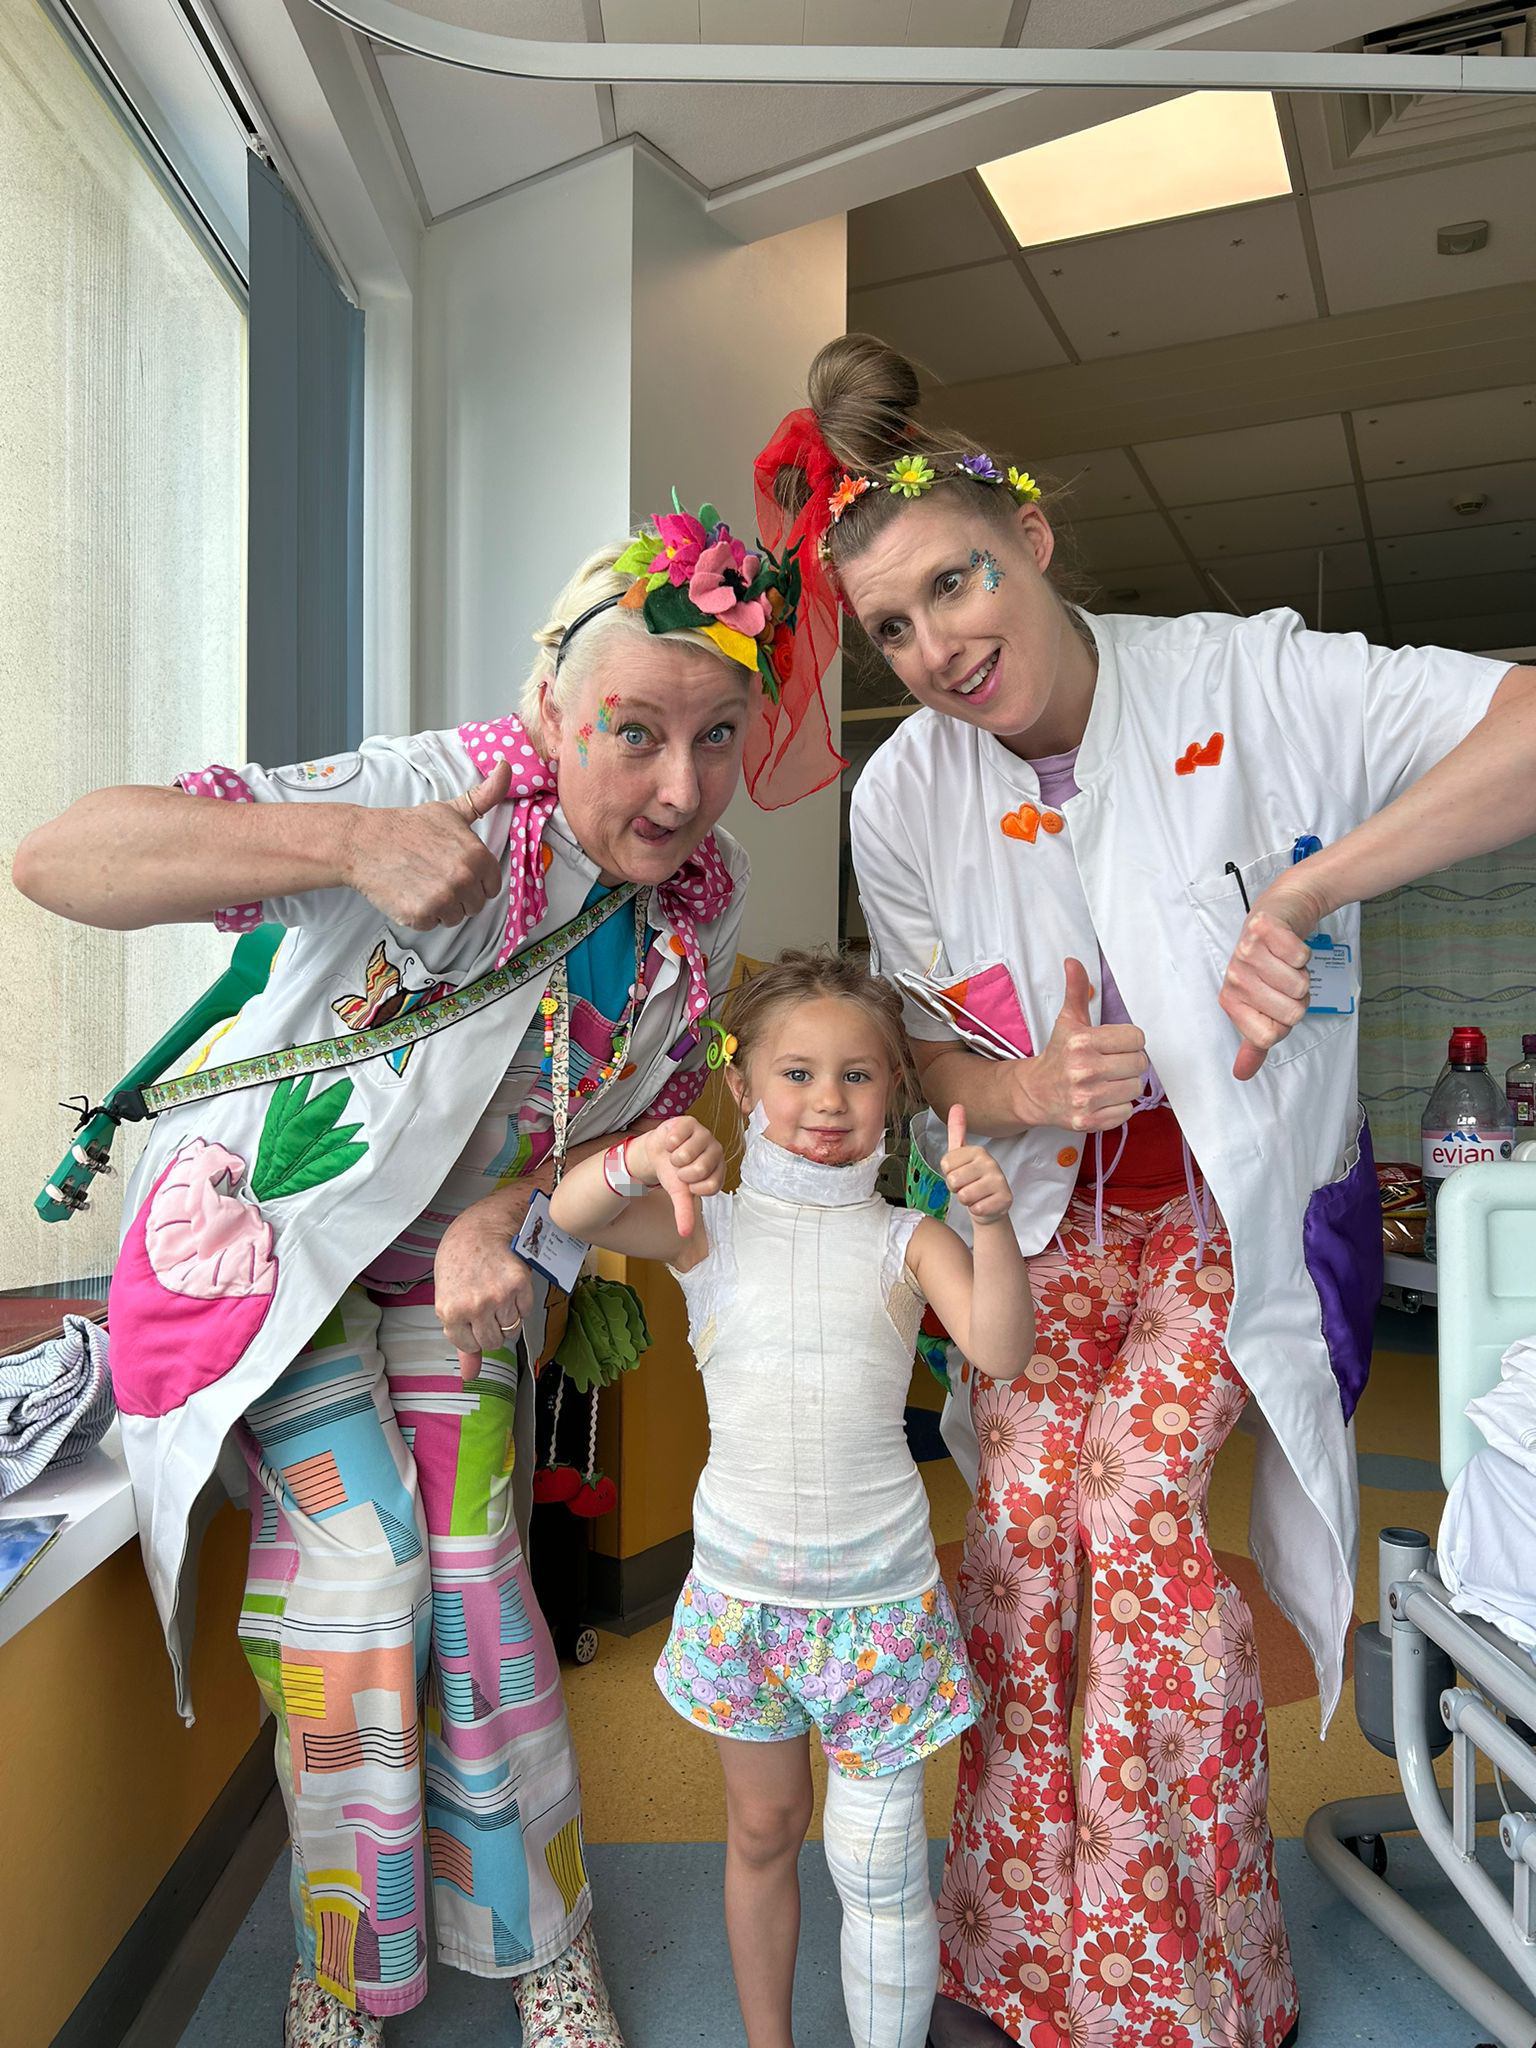 Charlotte Woodman and Alan Boddington's daughter Tay in hospital